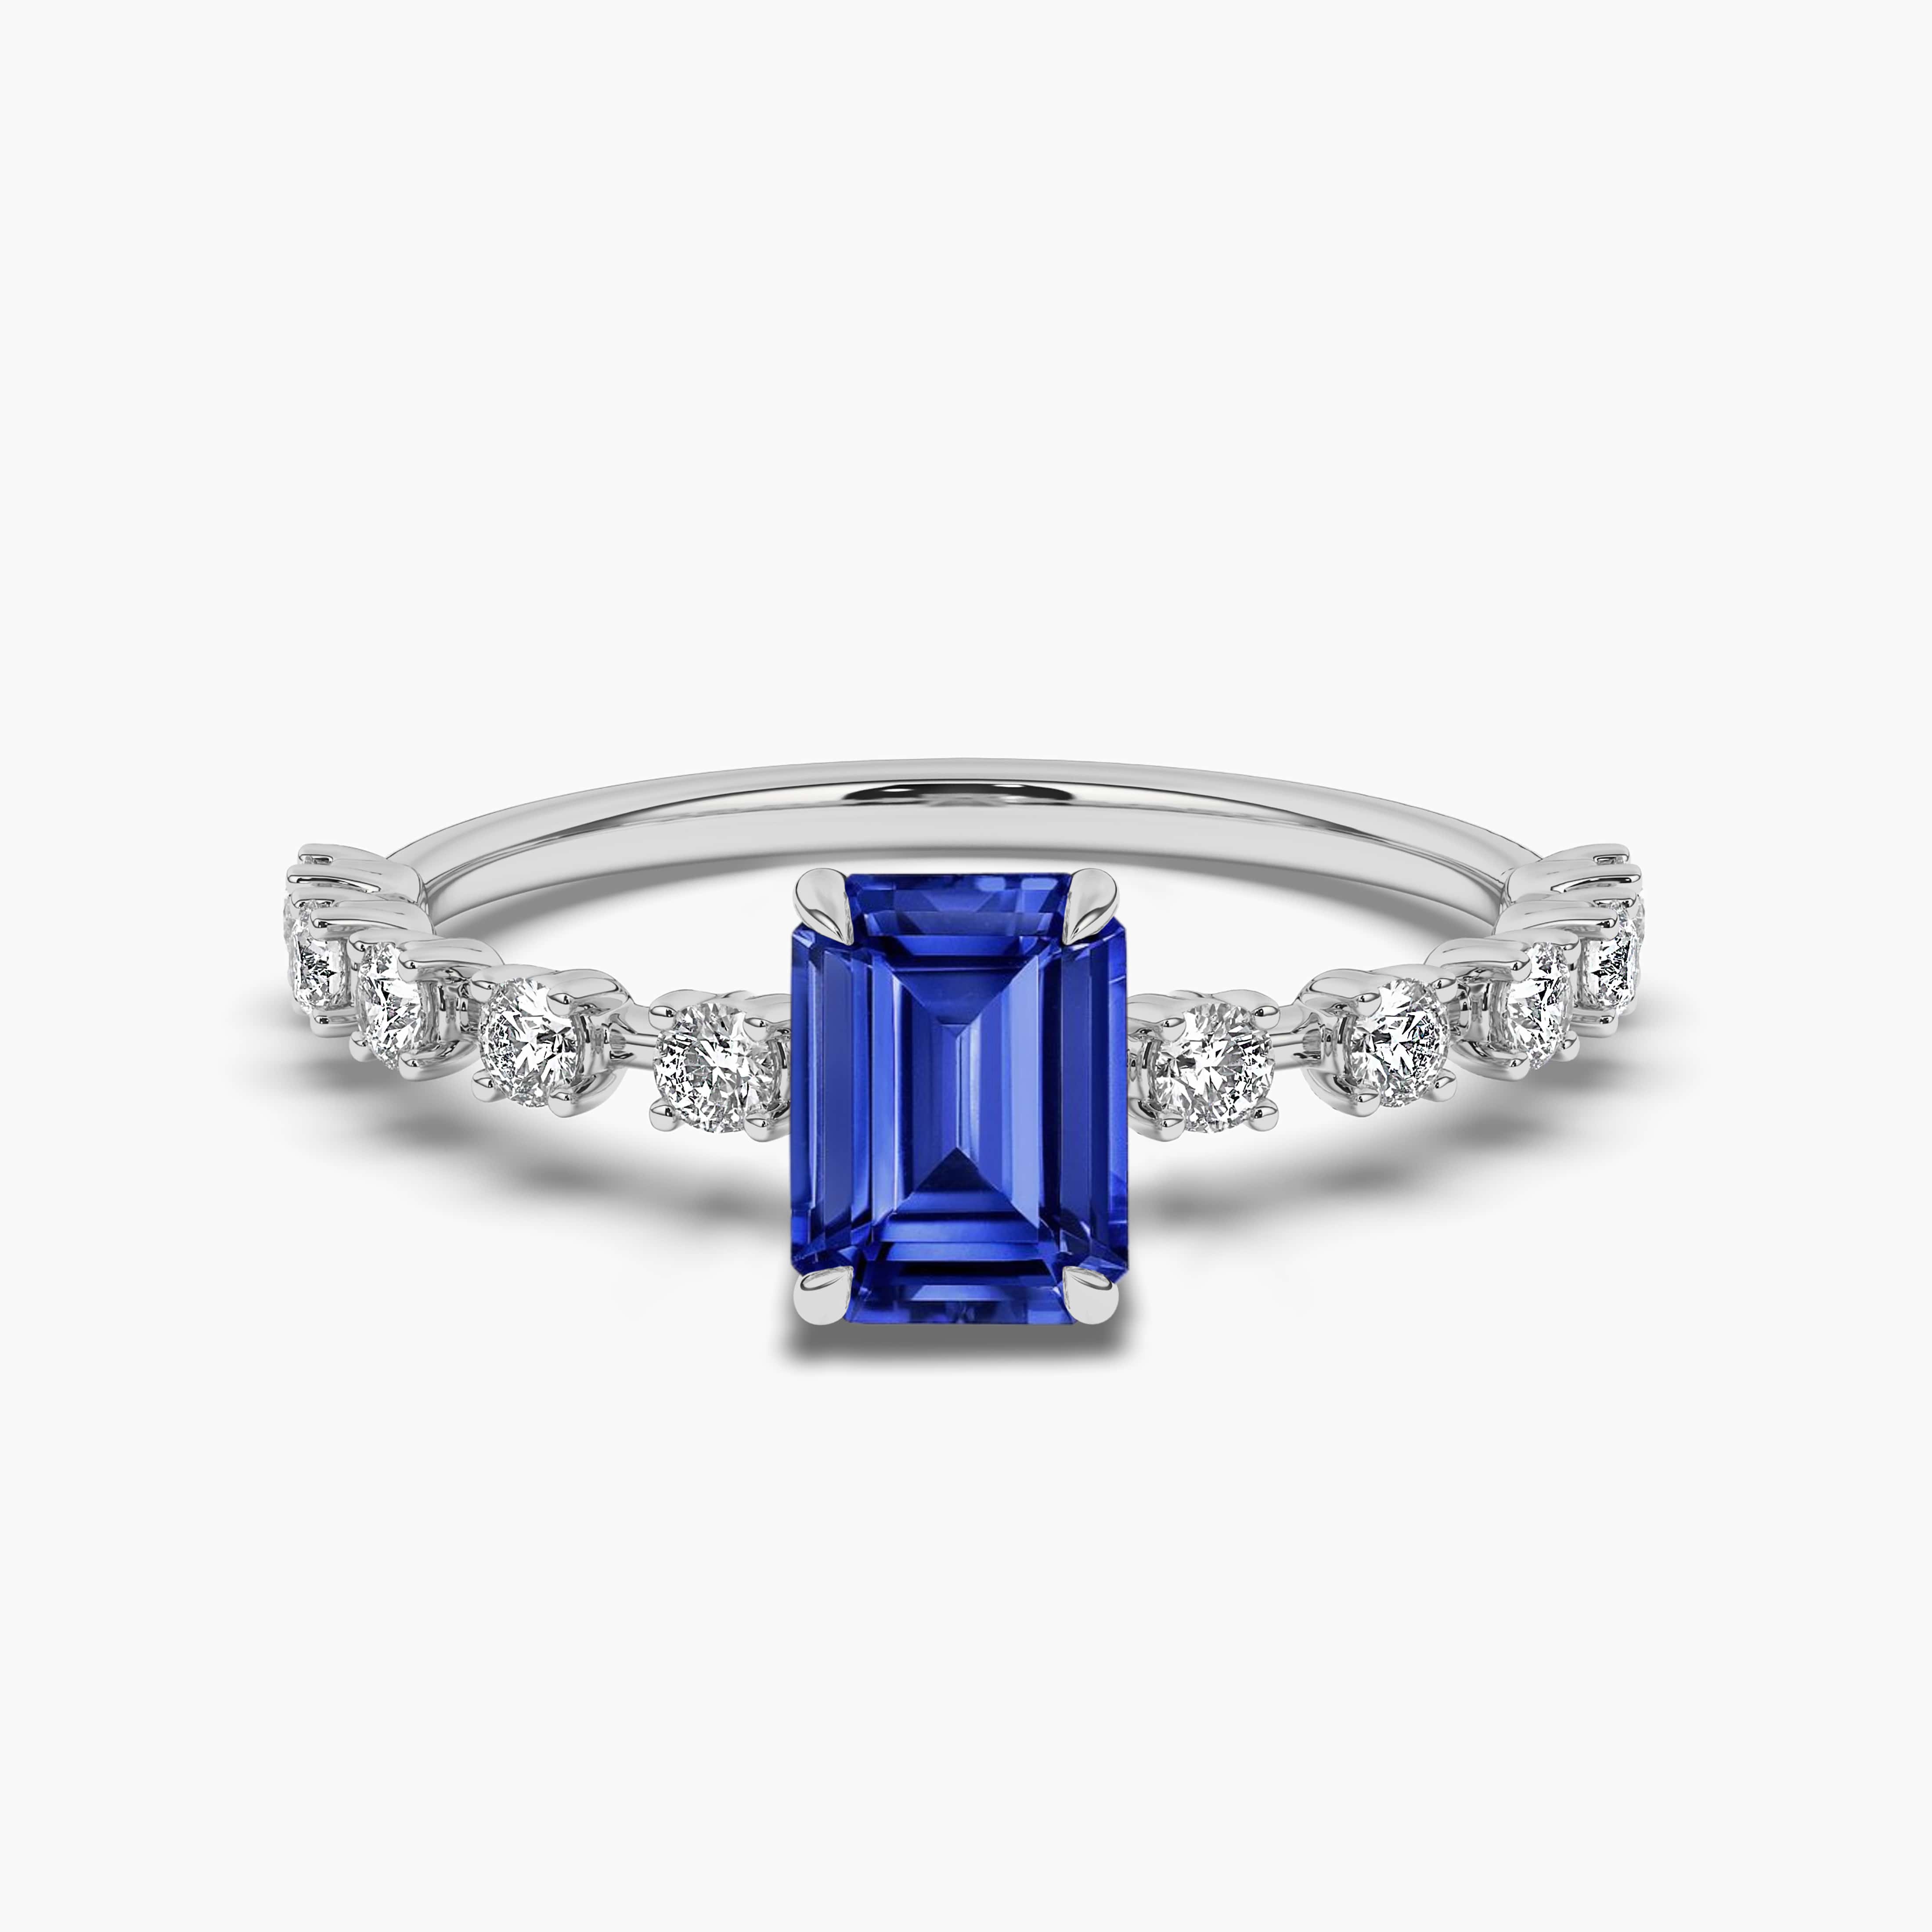 Blue sapphire emerald cut and diamond White gold ring